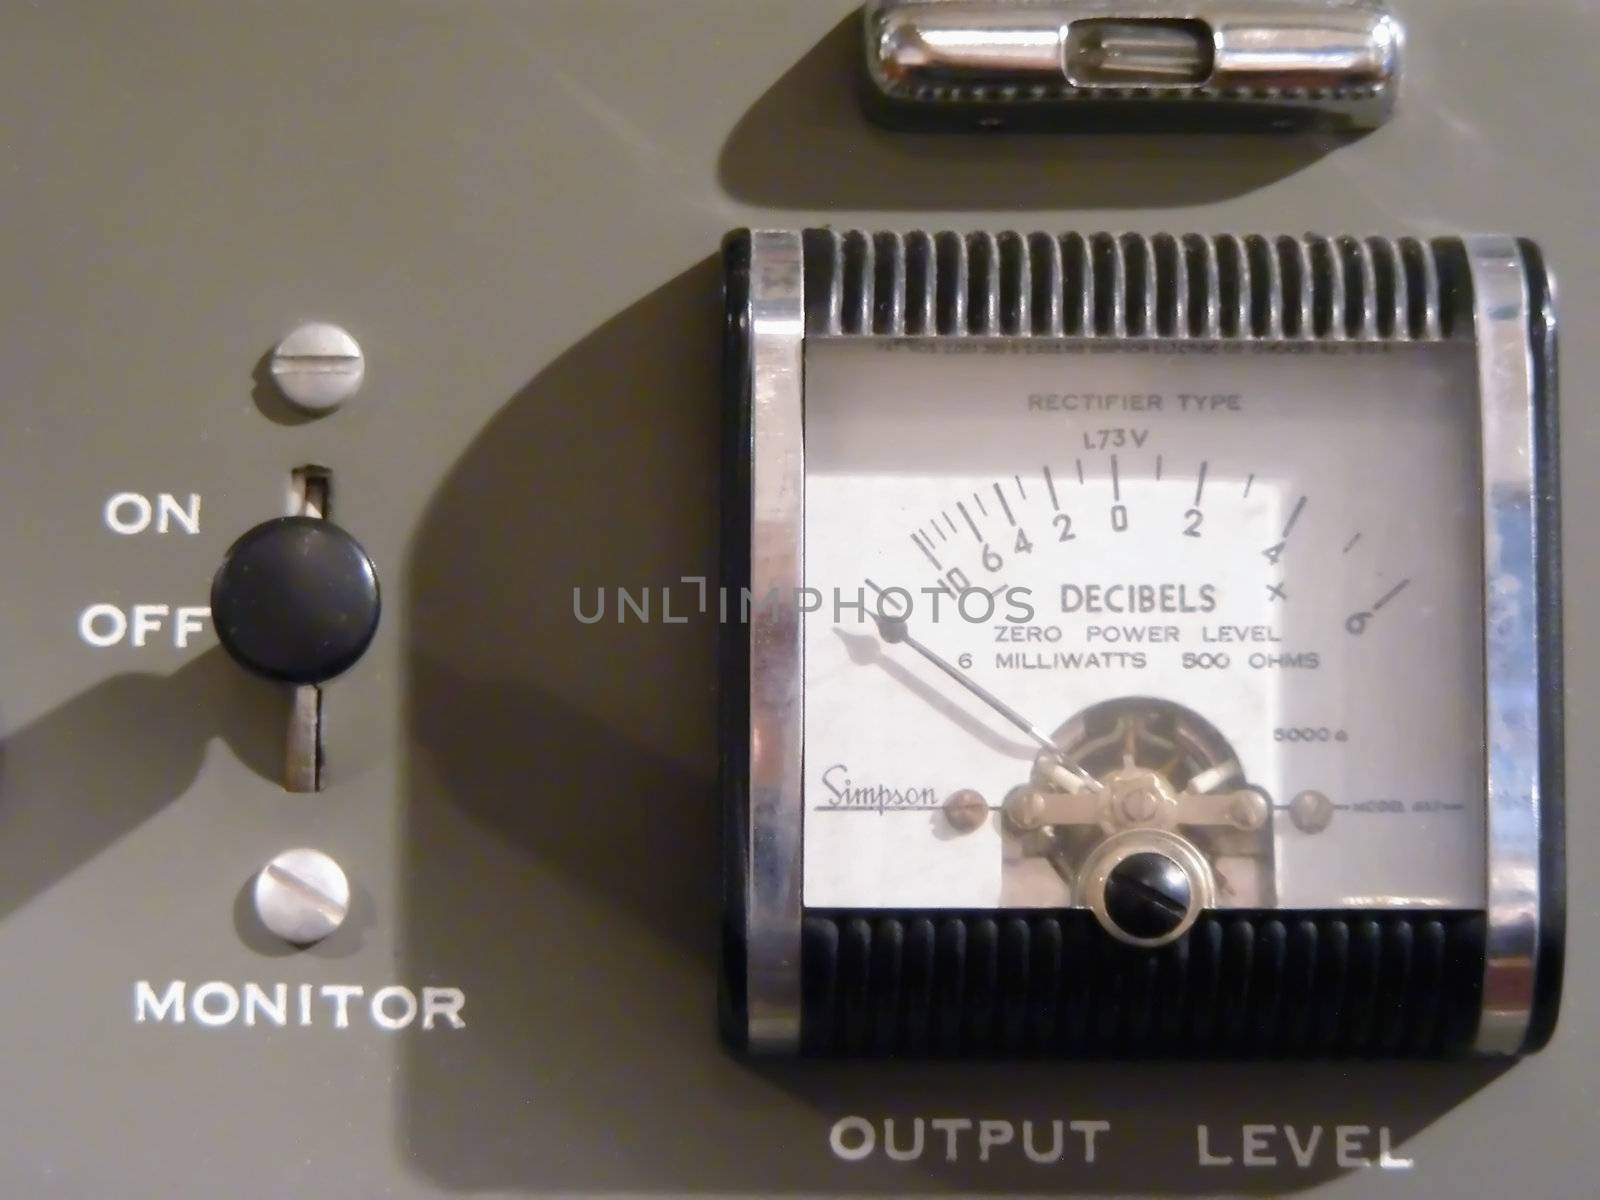 An antique intercom system control panel.